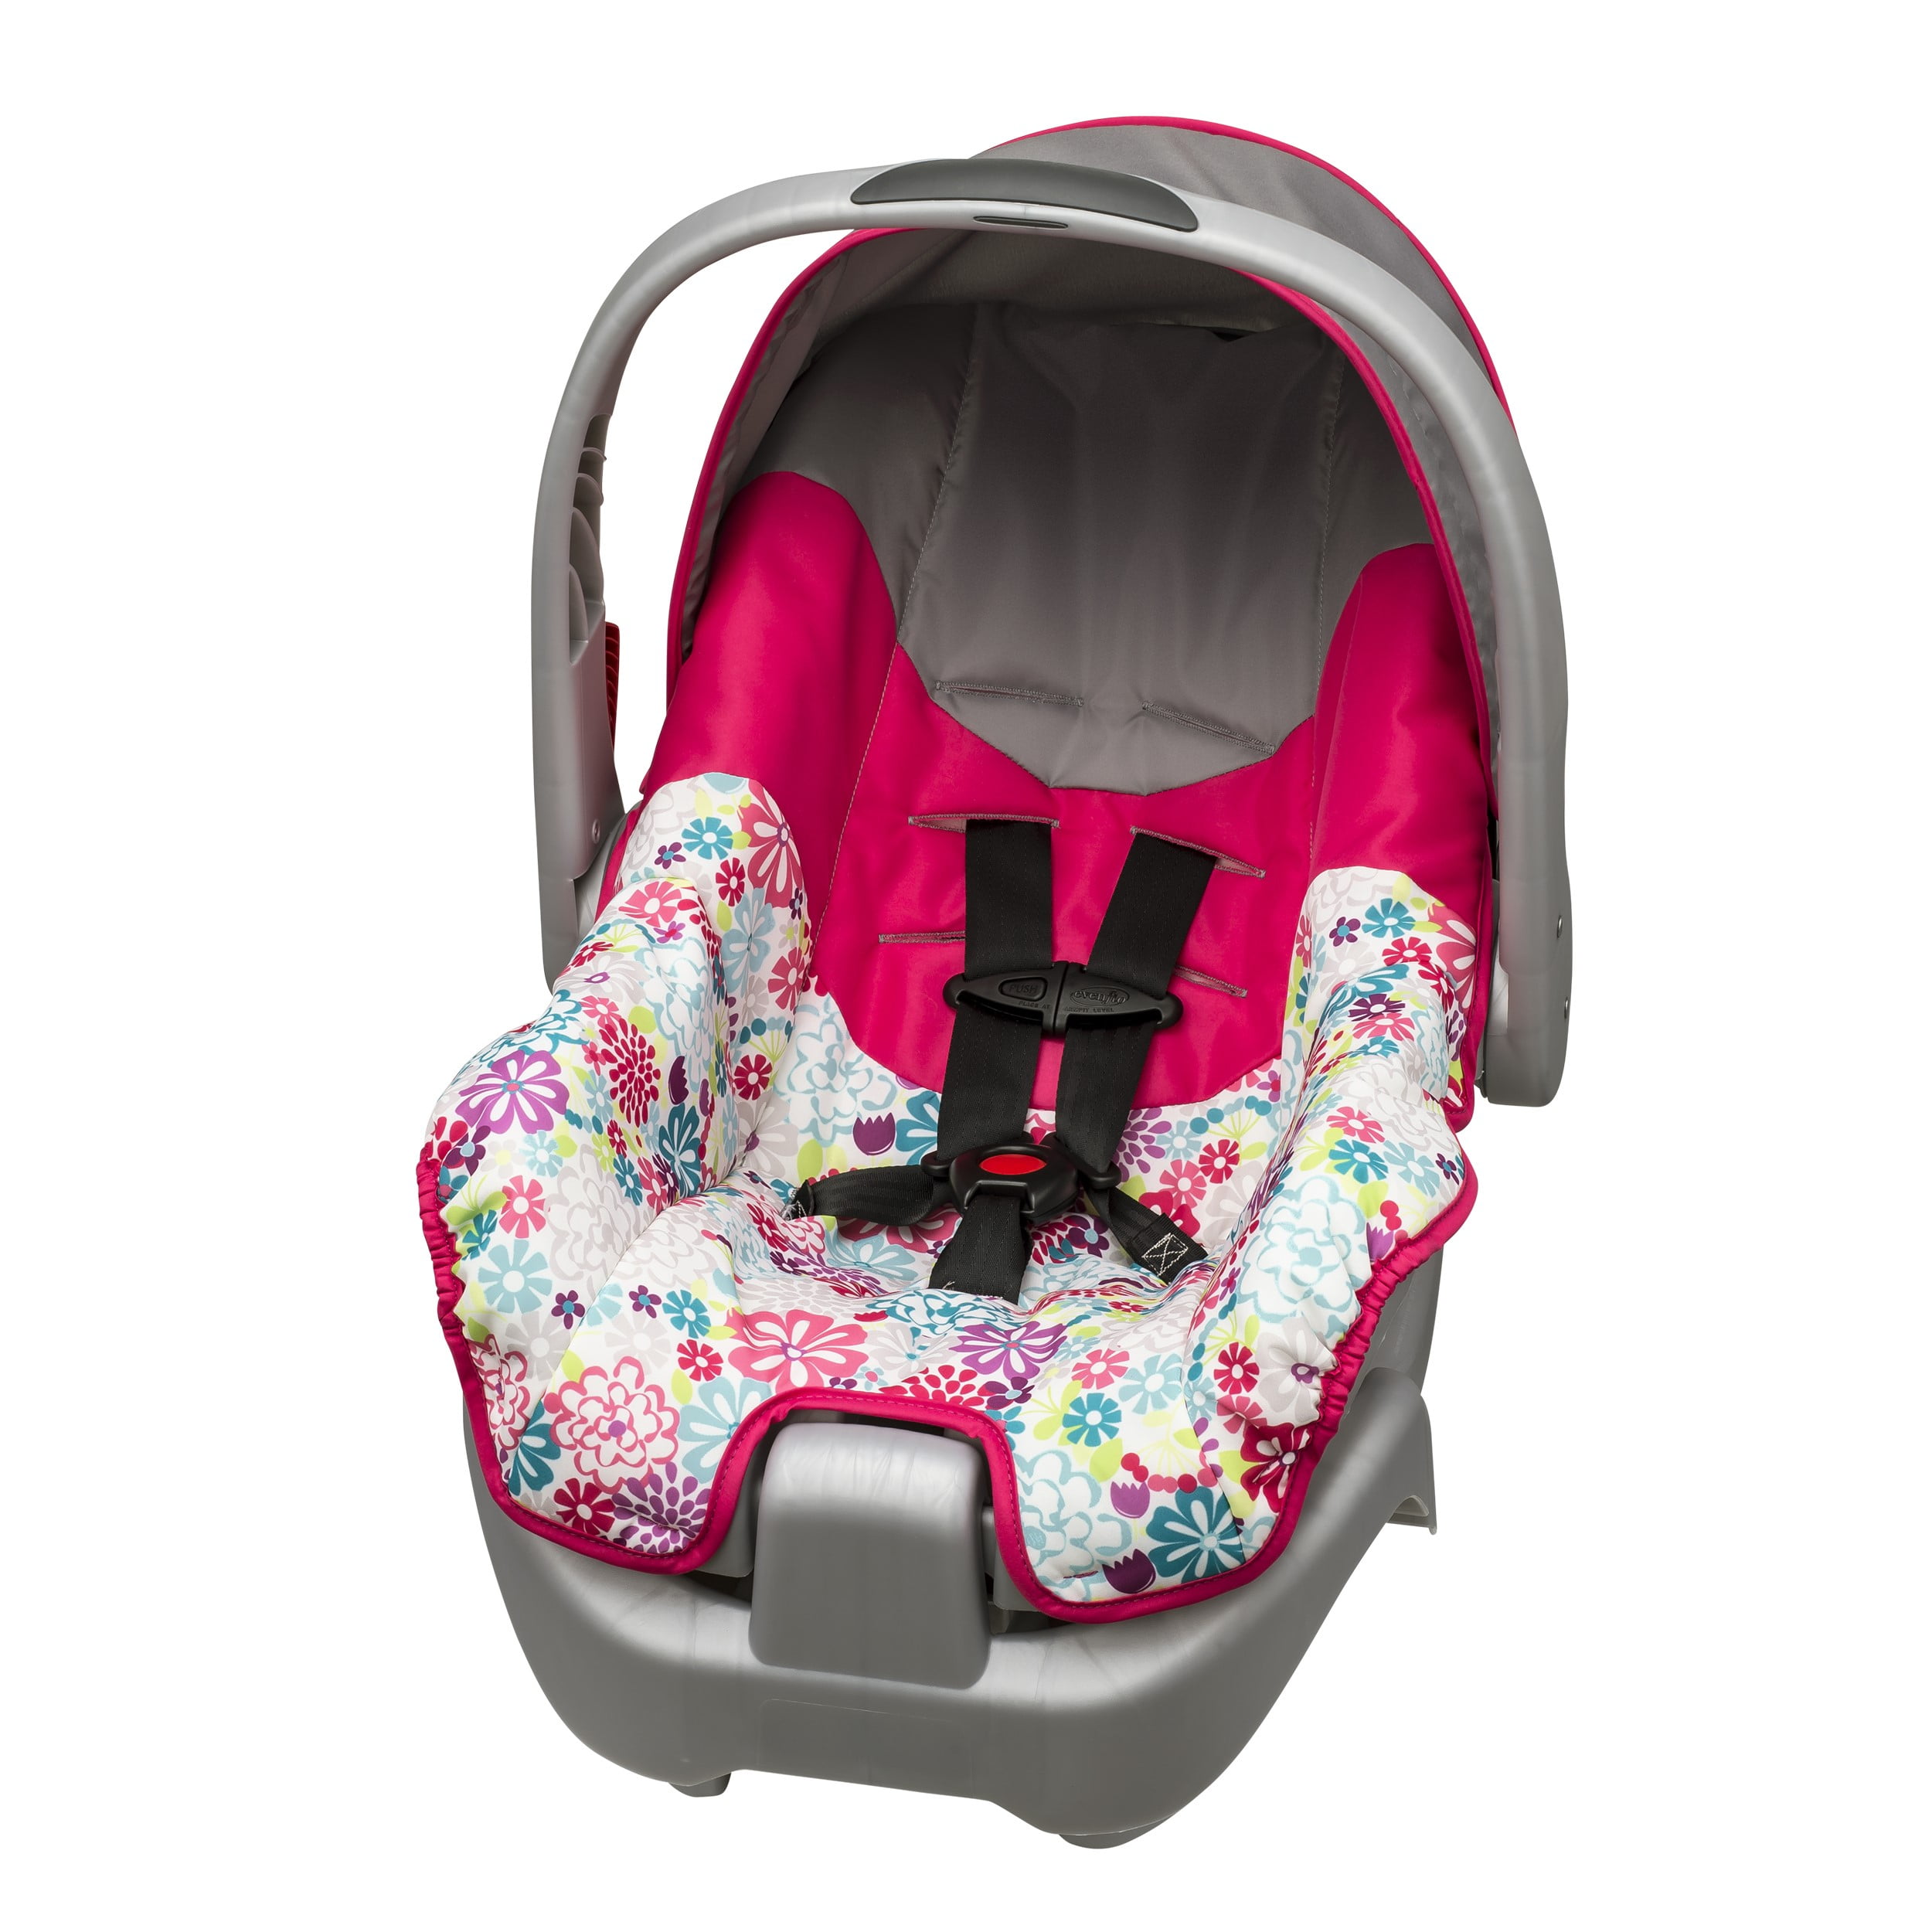 Sabrina Evenflo Nurture Infant Car Seat 